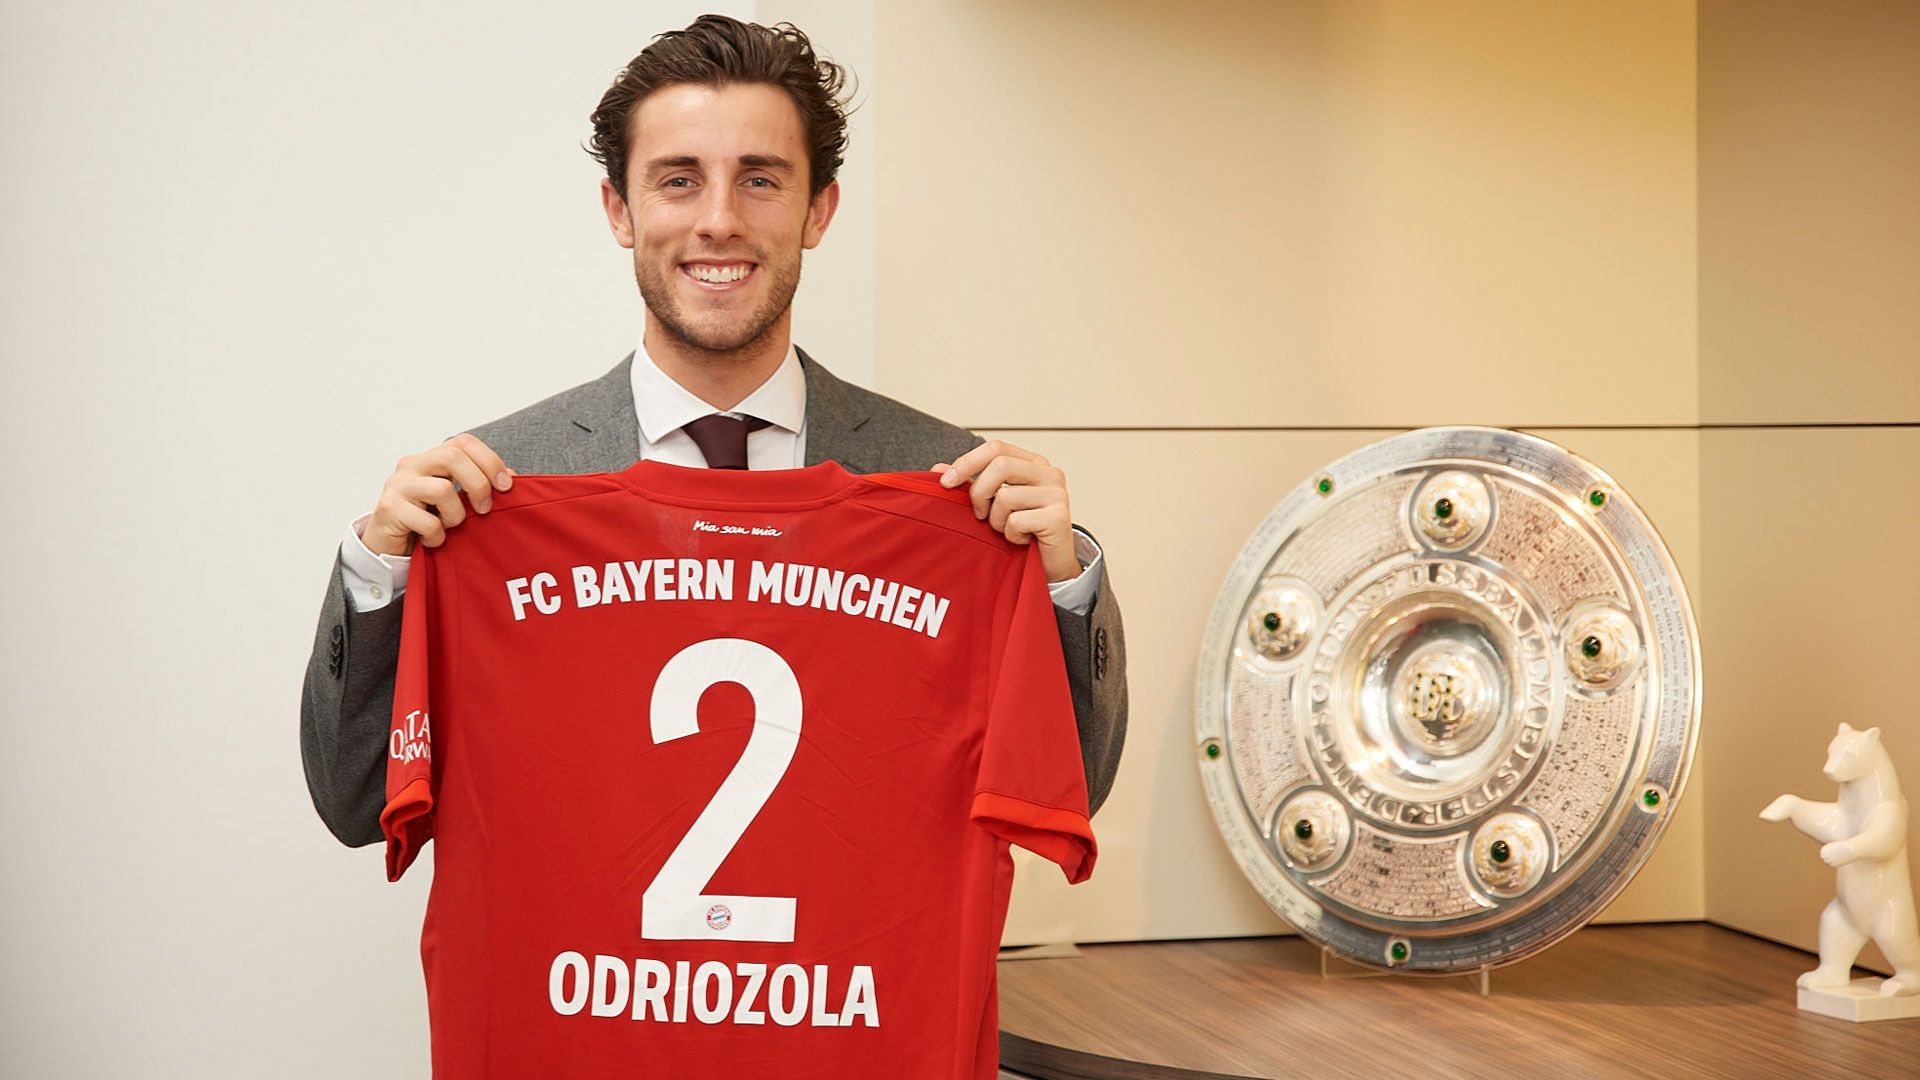 Odriozola raring to go at FC Bayern Bayern Munich